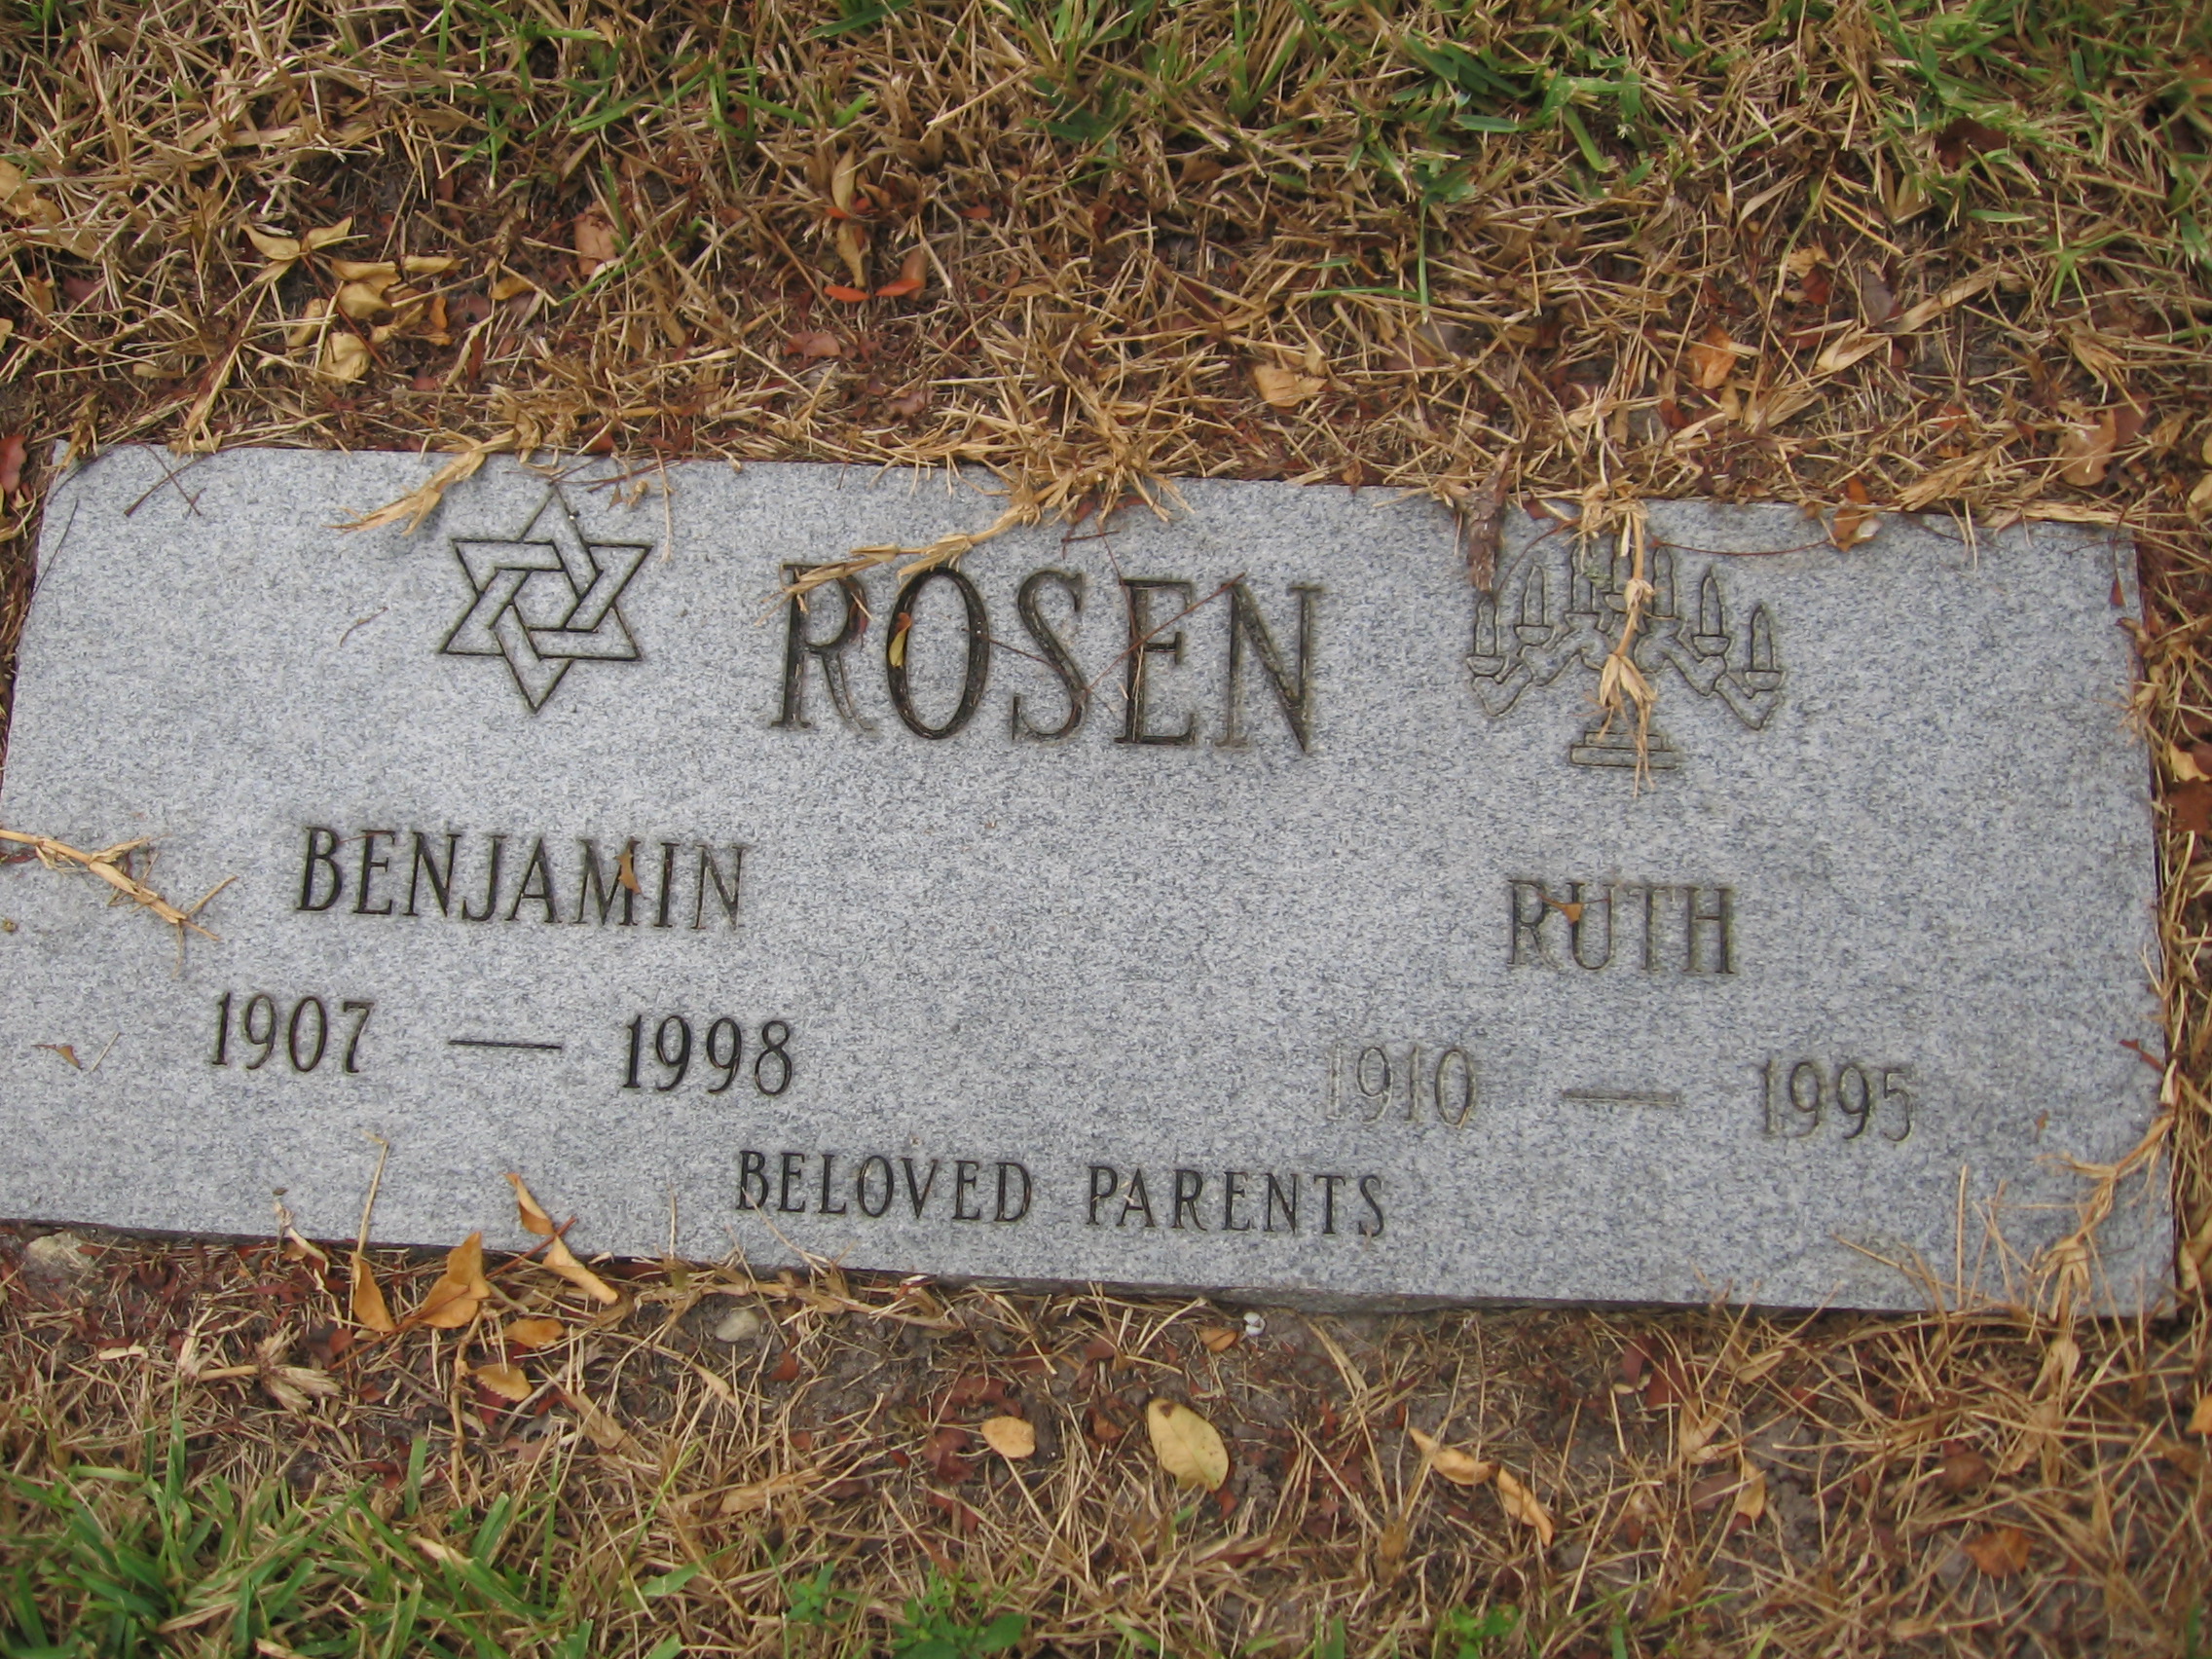 Benjamin Rosen